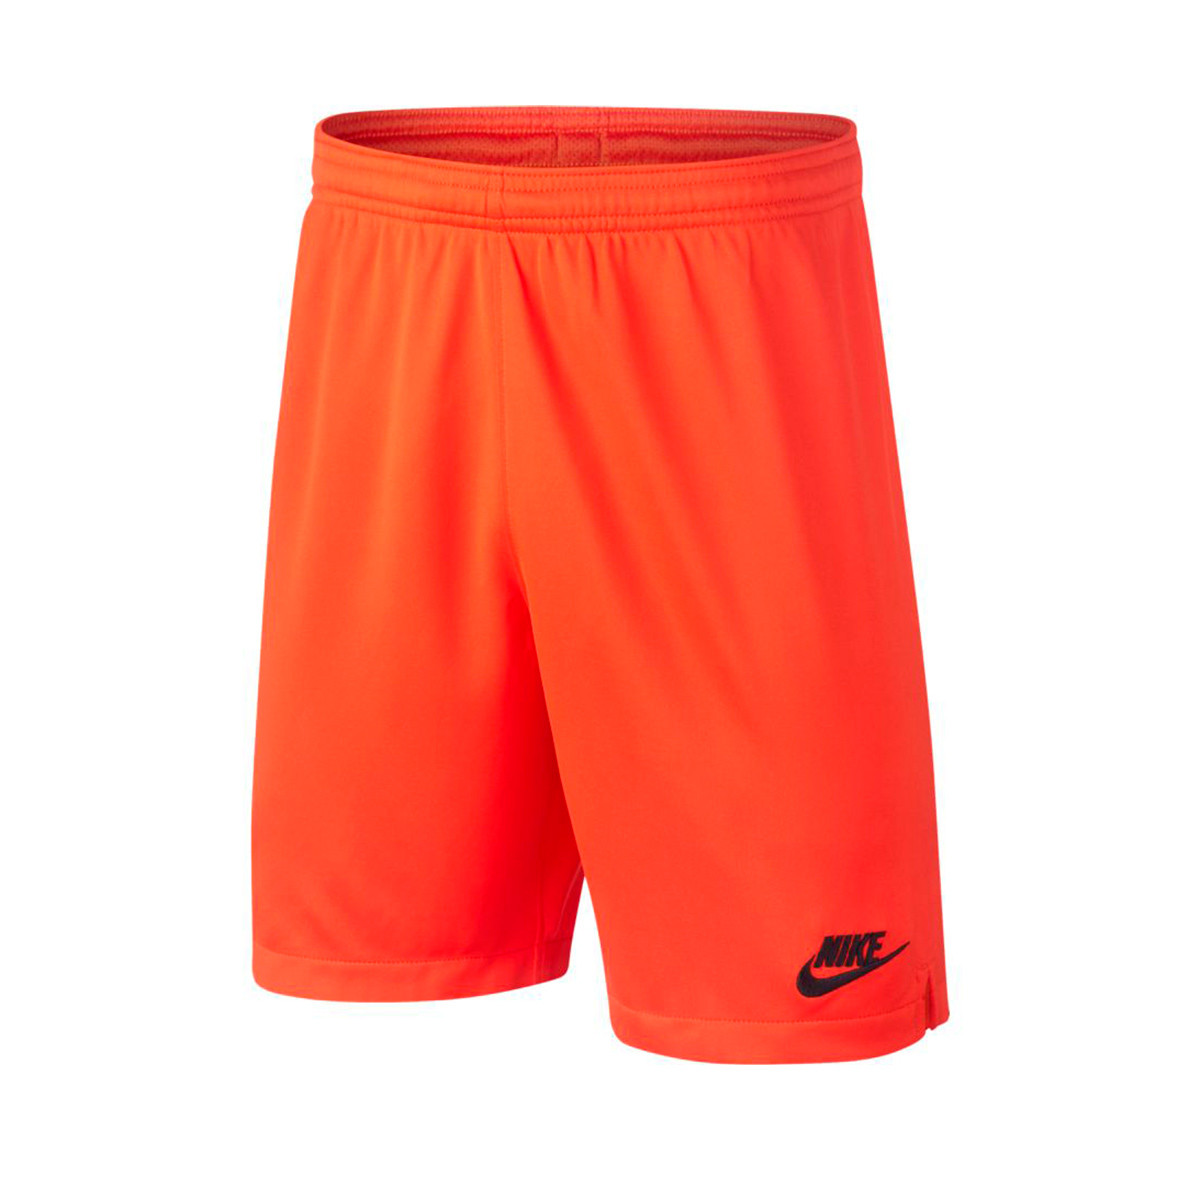 Shorts Nike Kids Tottenham Hotspur Breathe Stadium 2019-2020 Goalkeeper  Team orange-Black - Football store Fútbol Emotion